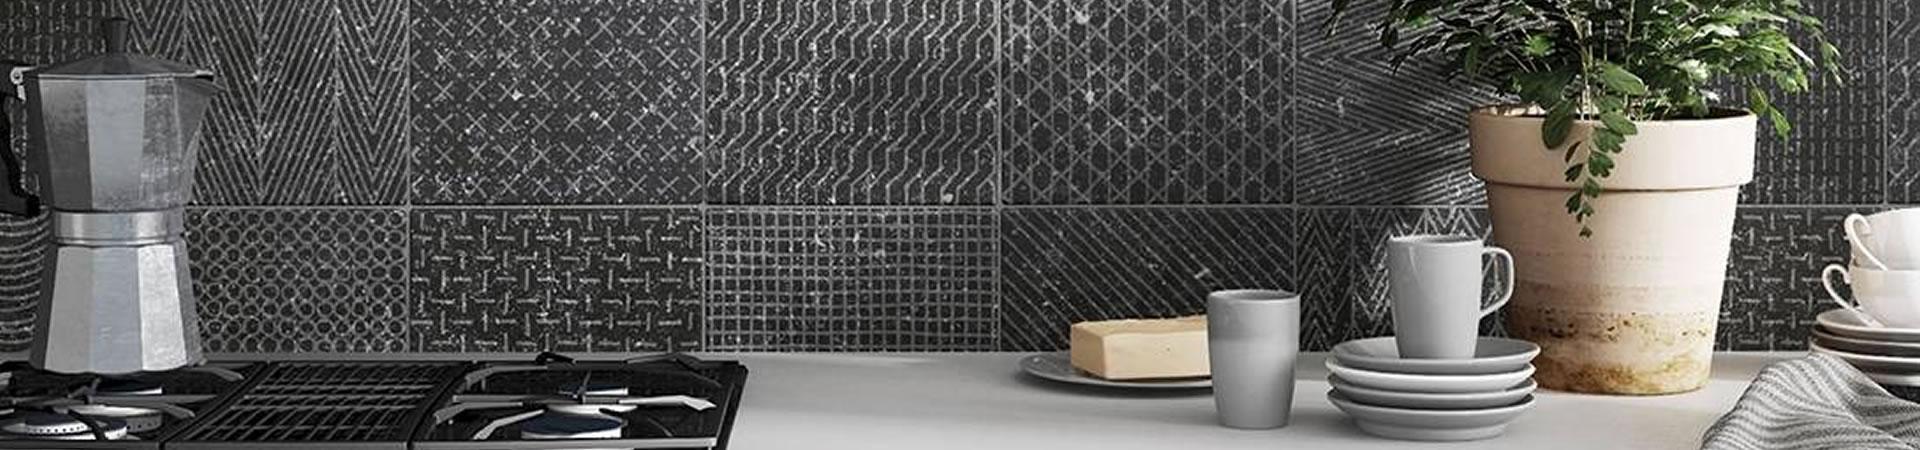 Kitchen backsplash with Coralstone tile in Black